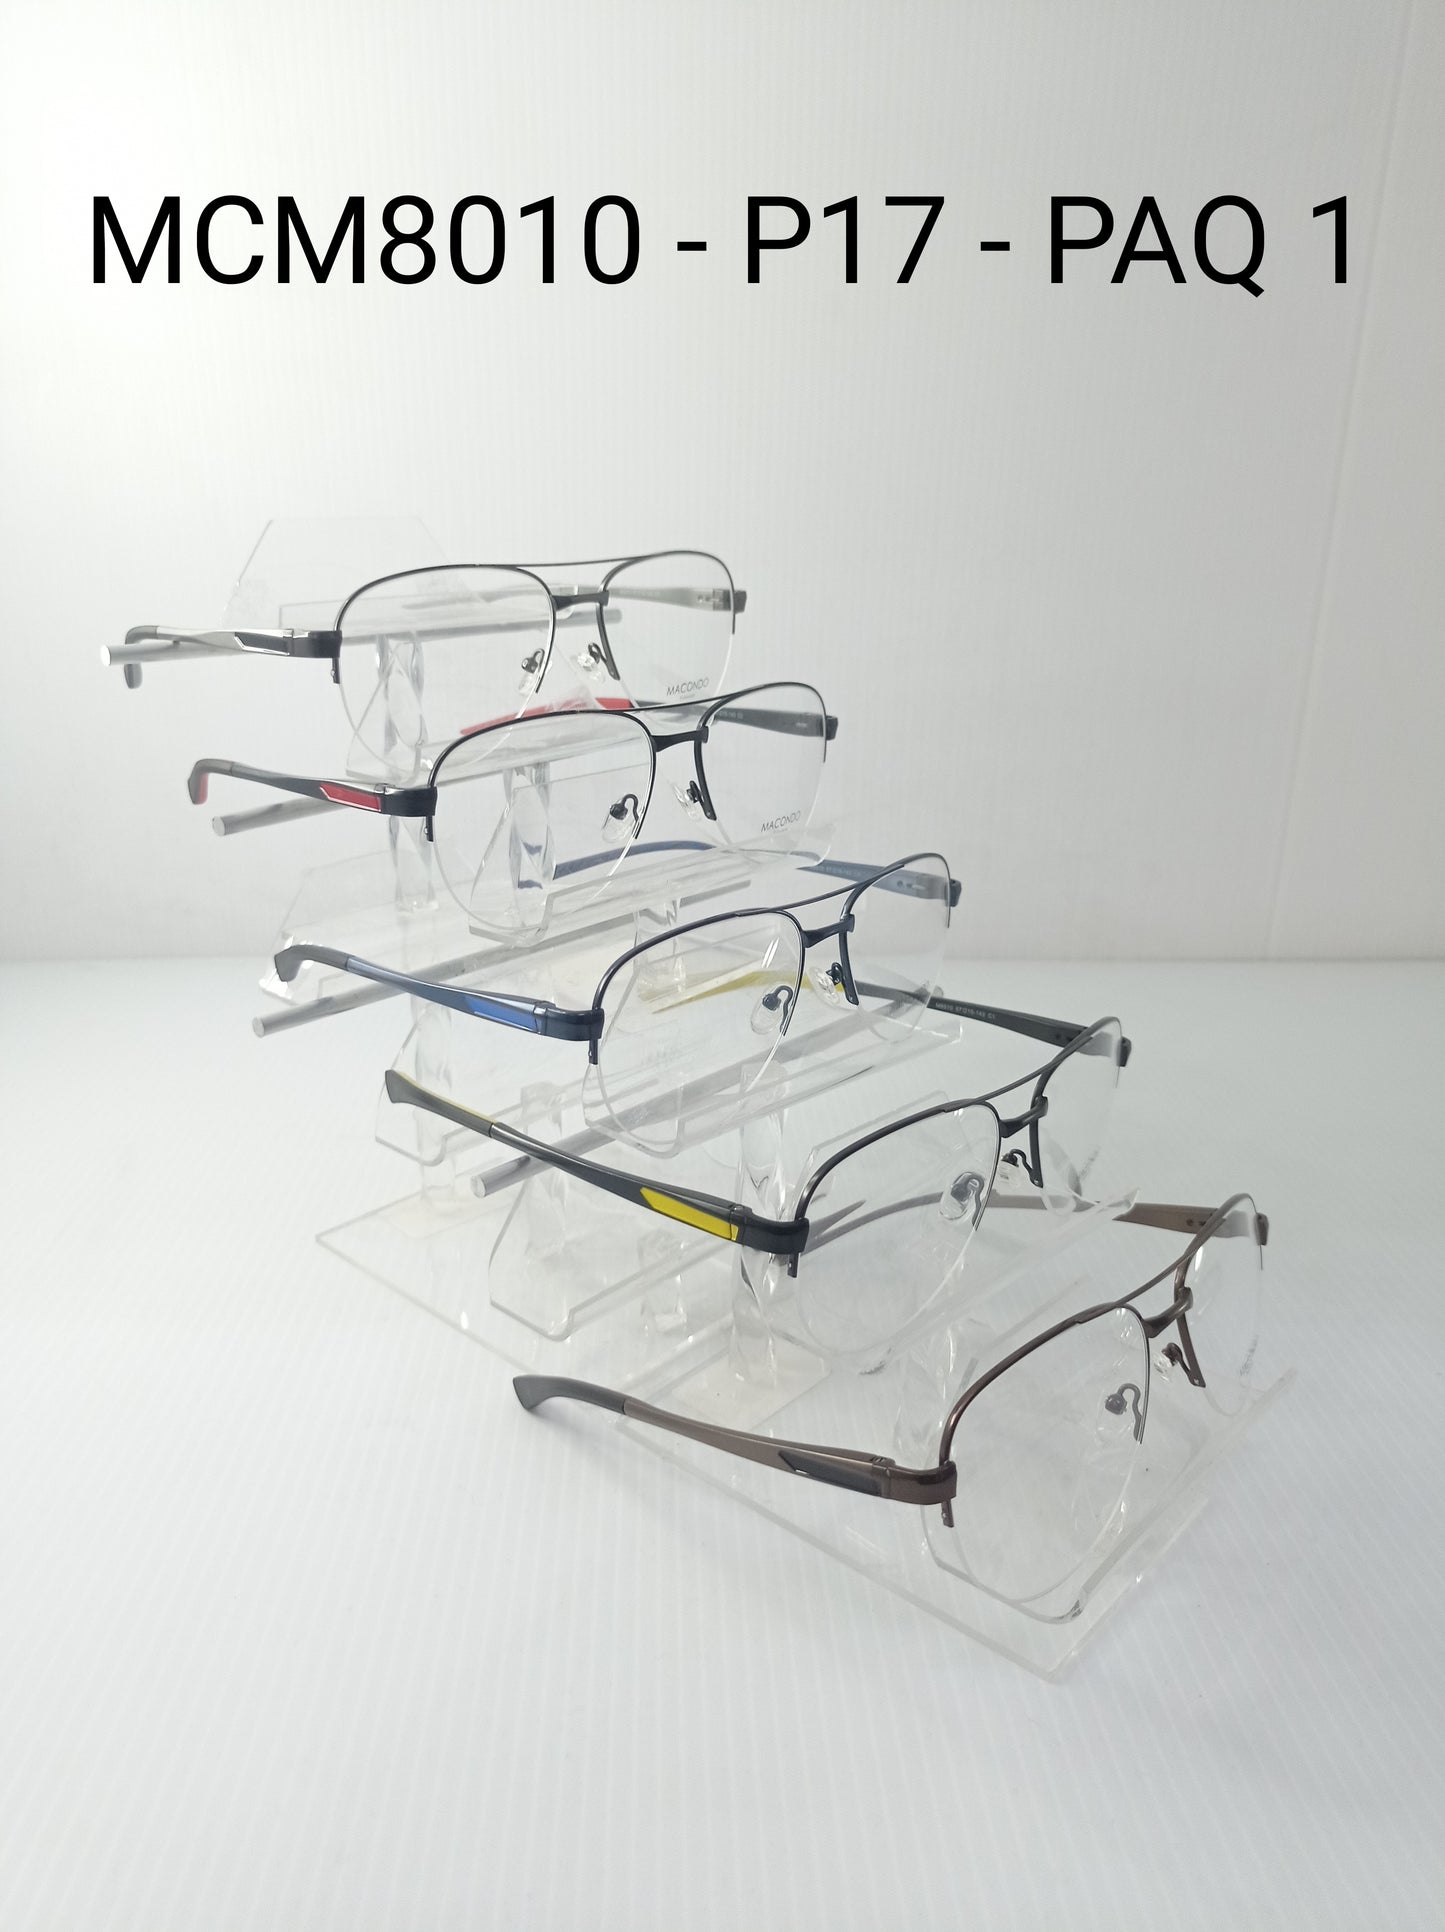 MACONDO - MCM8010 - P17